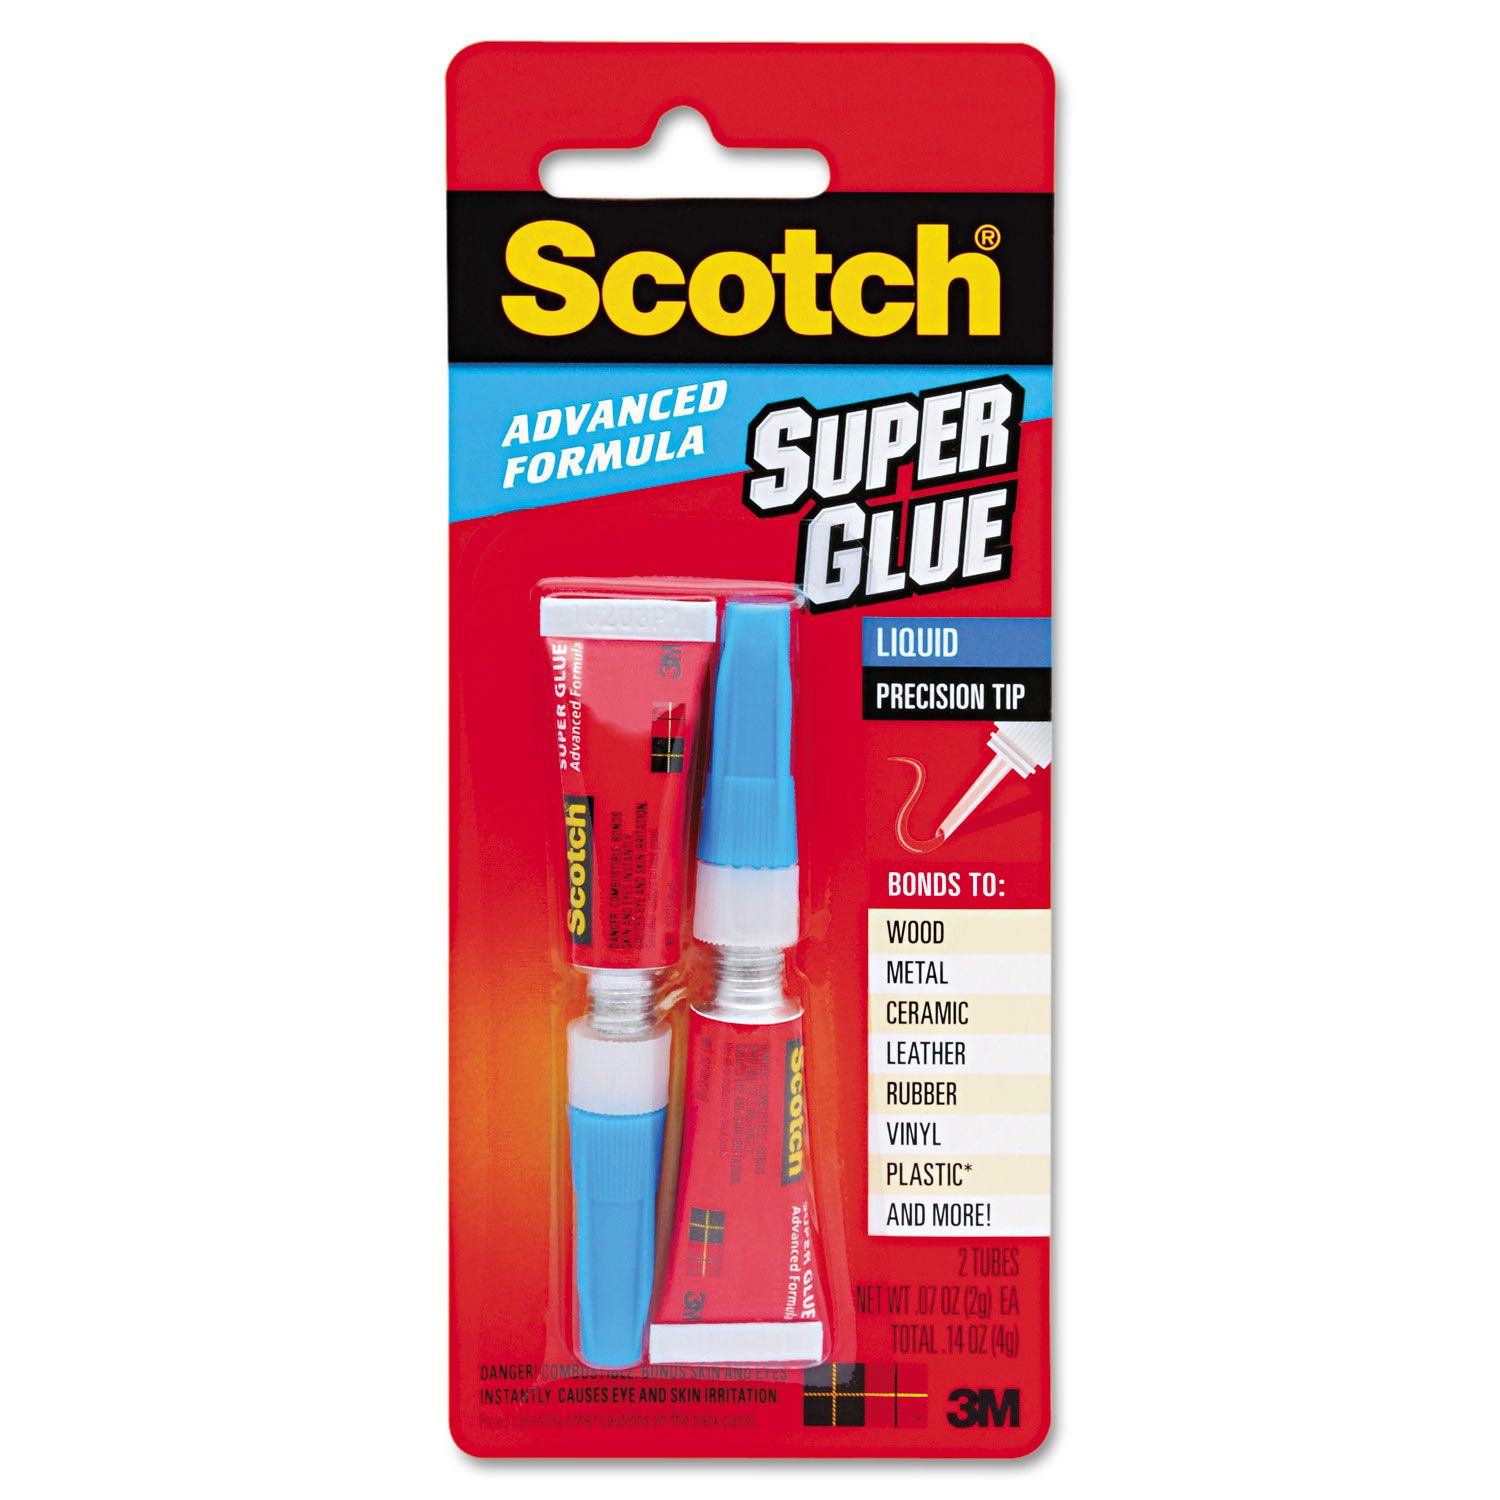  Scotch AD121 Single Use Super Glue Advanced Formula Liquid, 0.07 oz, Dries Clear, 2/Pack (MMMAD121) 